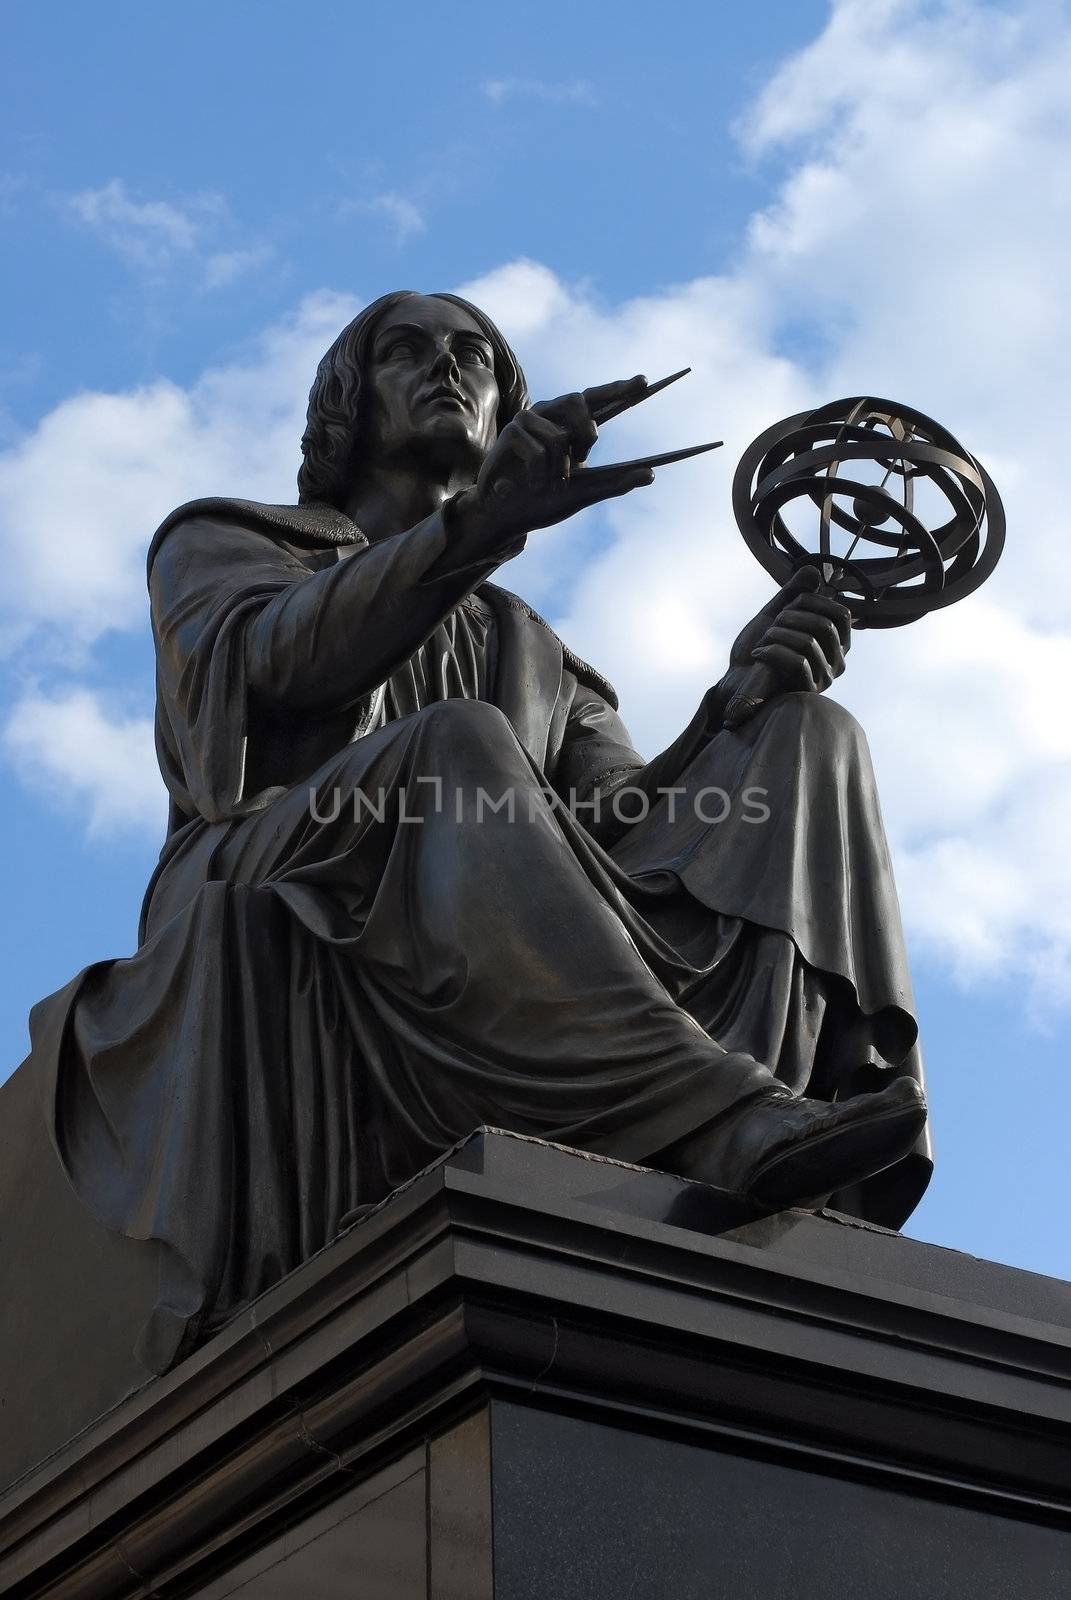 Copernicus Monument by Vectorex